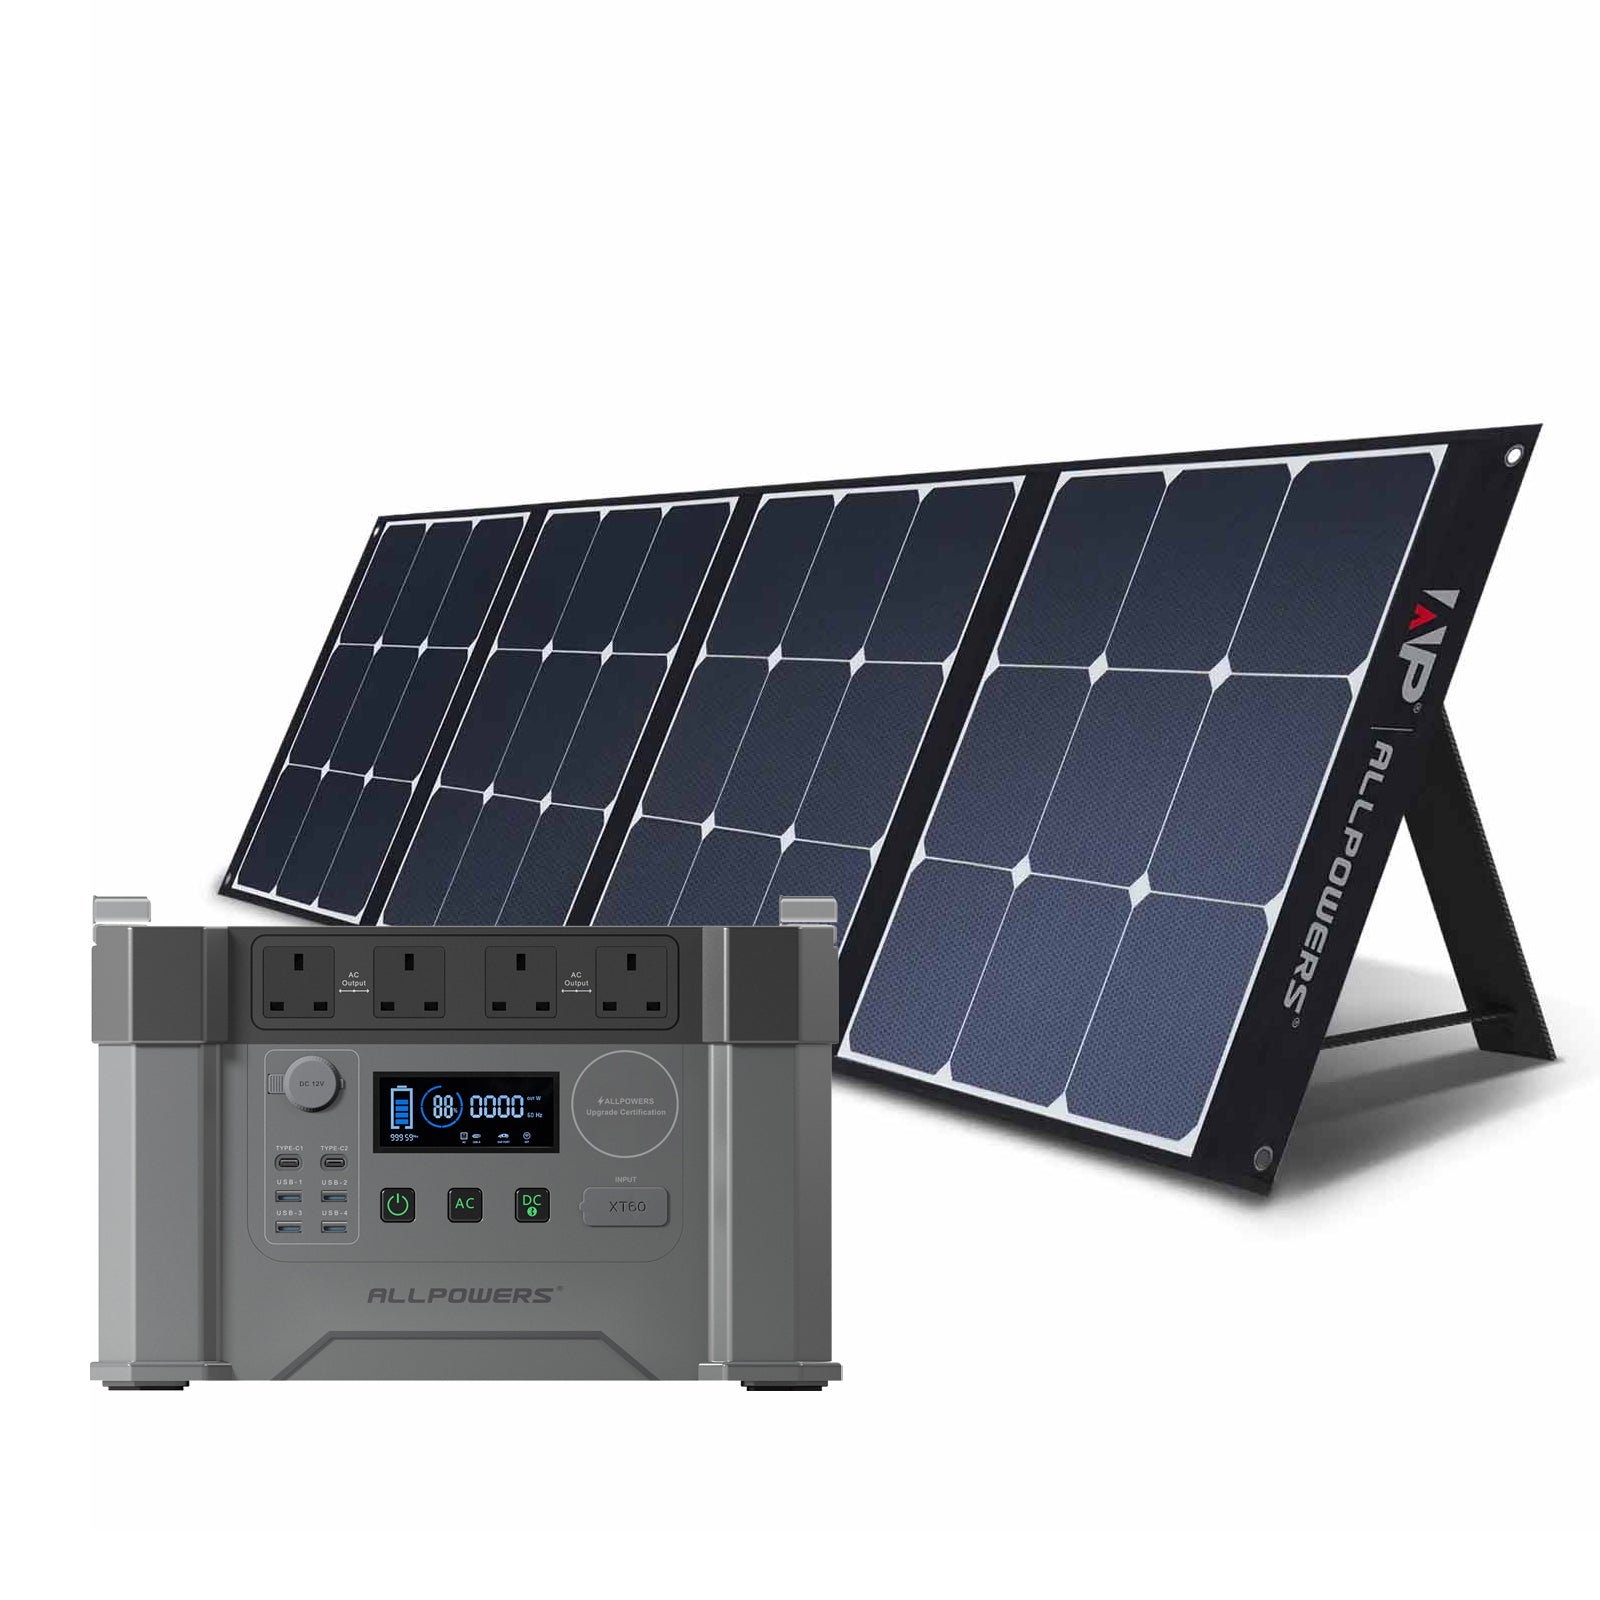 s2000-1-sp035-solar-generator-kit.jpg